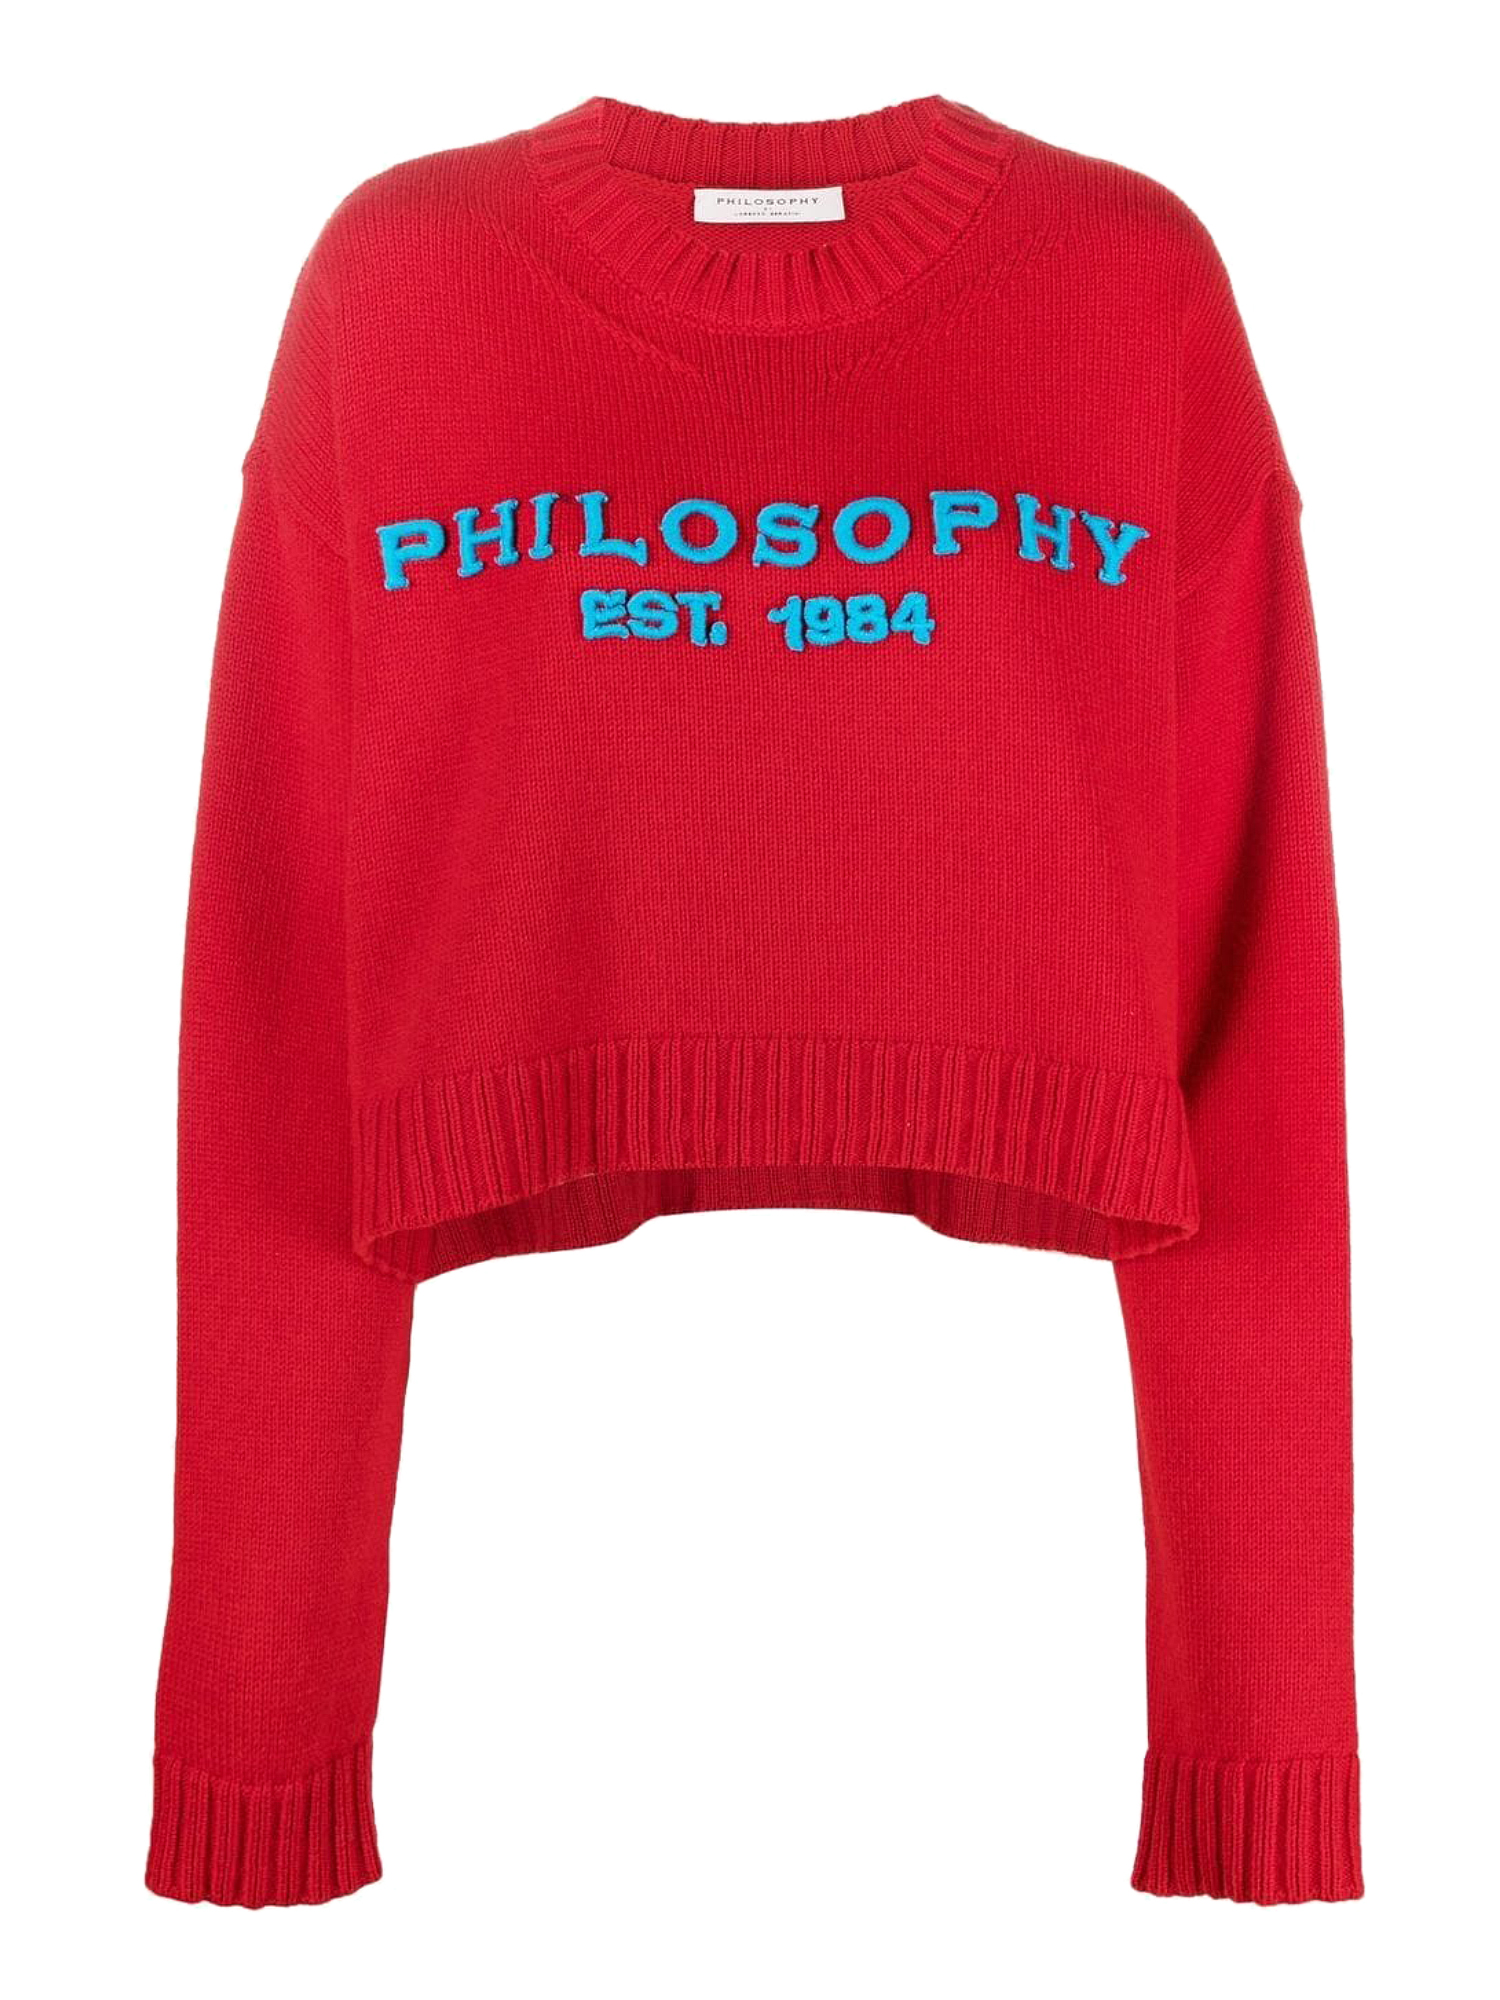 Pulls Et Sweat-shirts Pour Femme - Philosophy - En Wool Red - Taille:  -